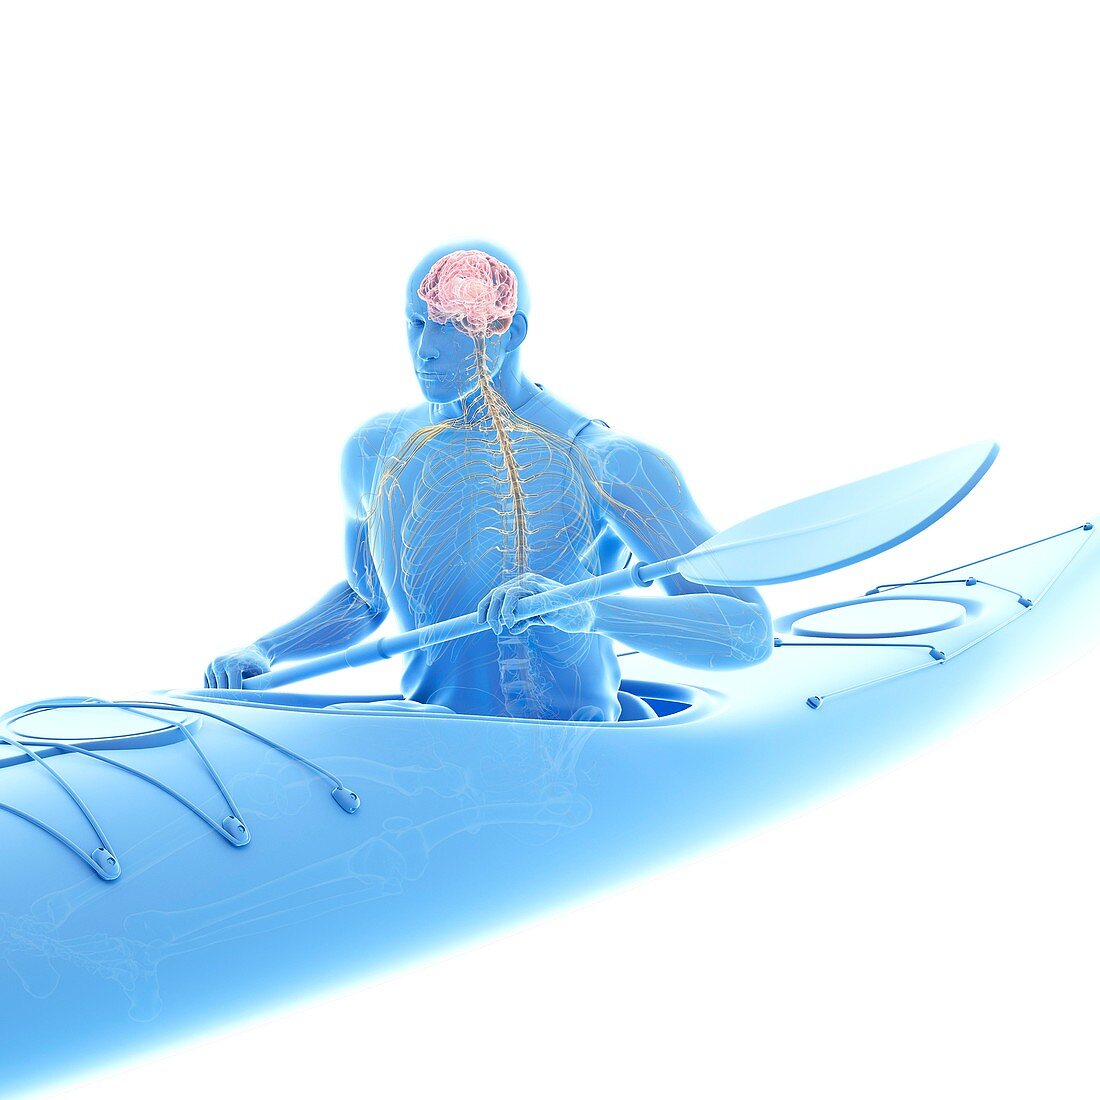 Canoeist's nervous system, illustration